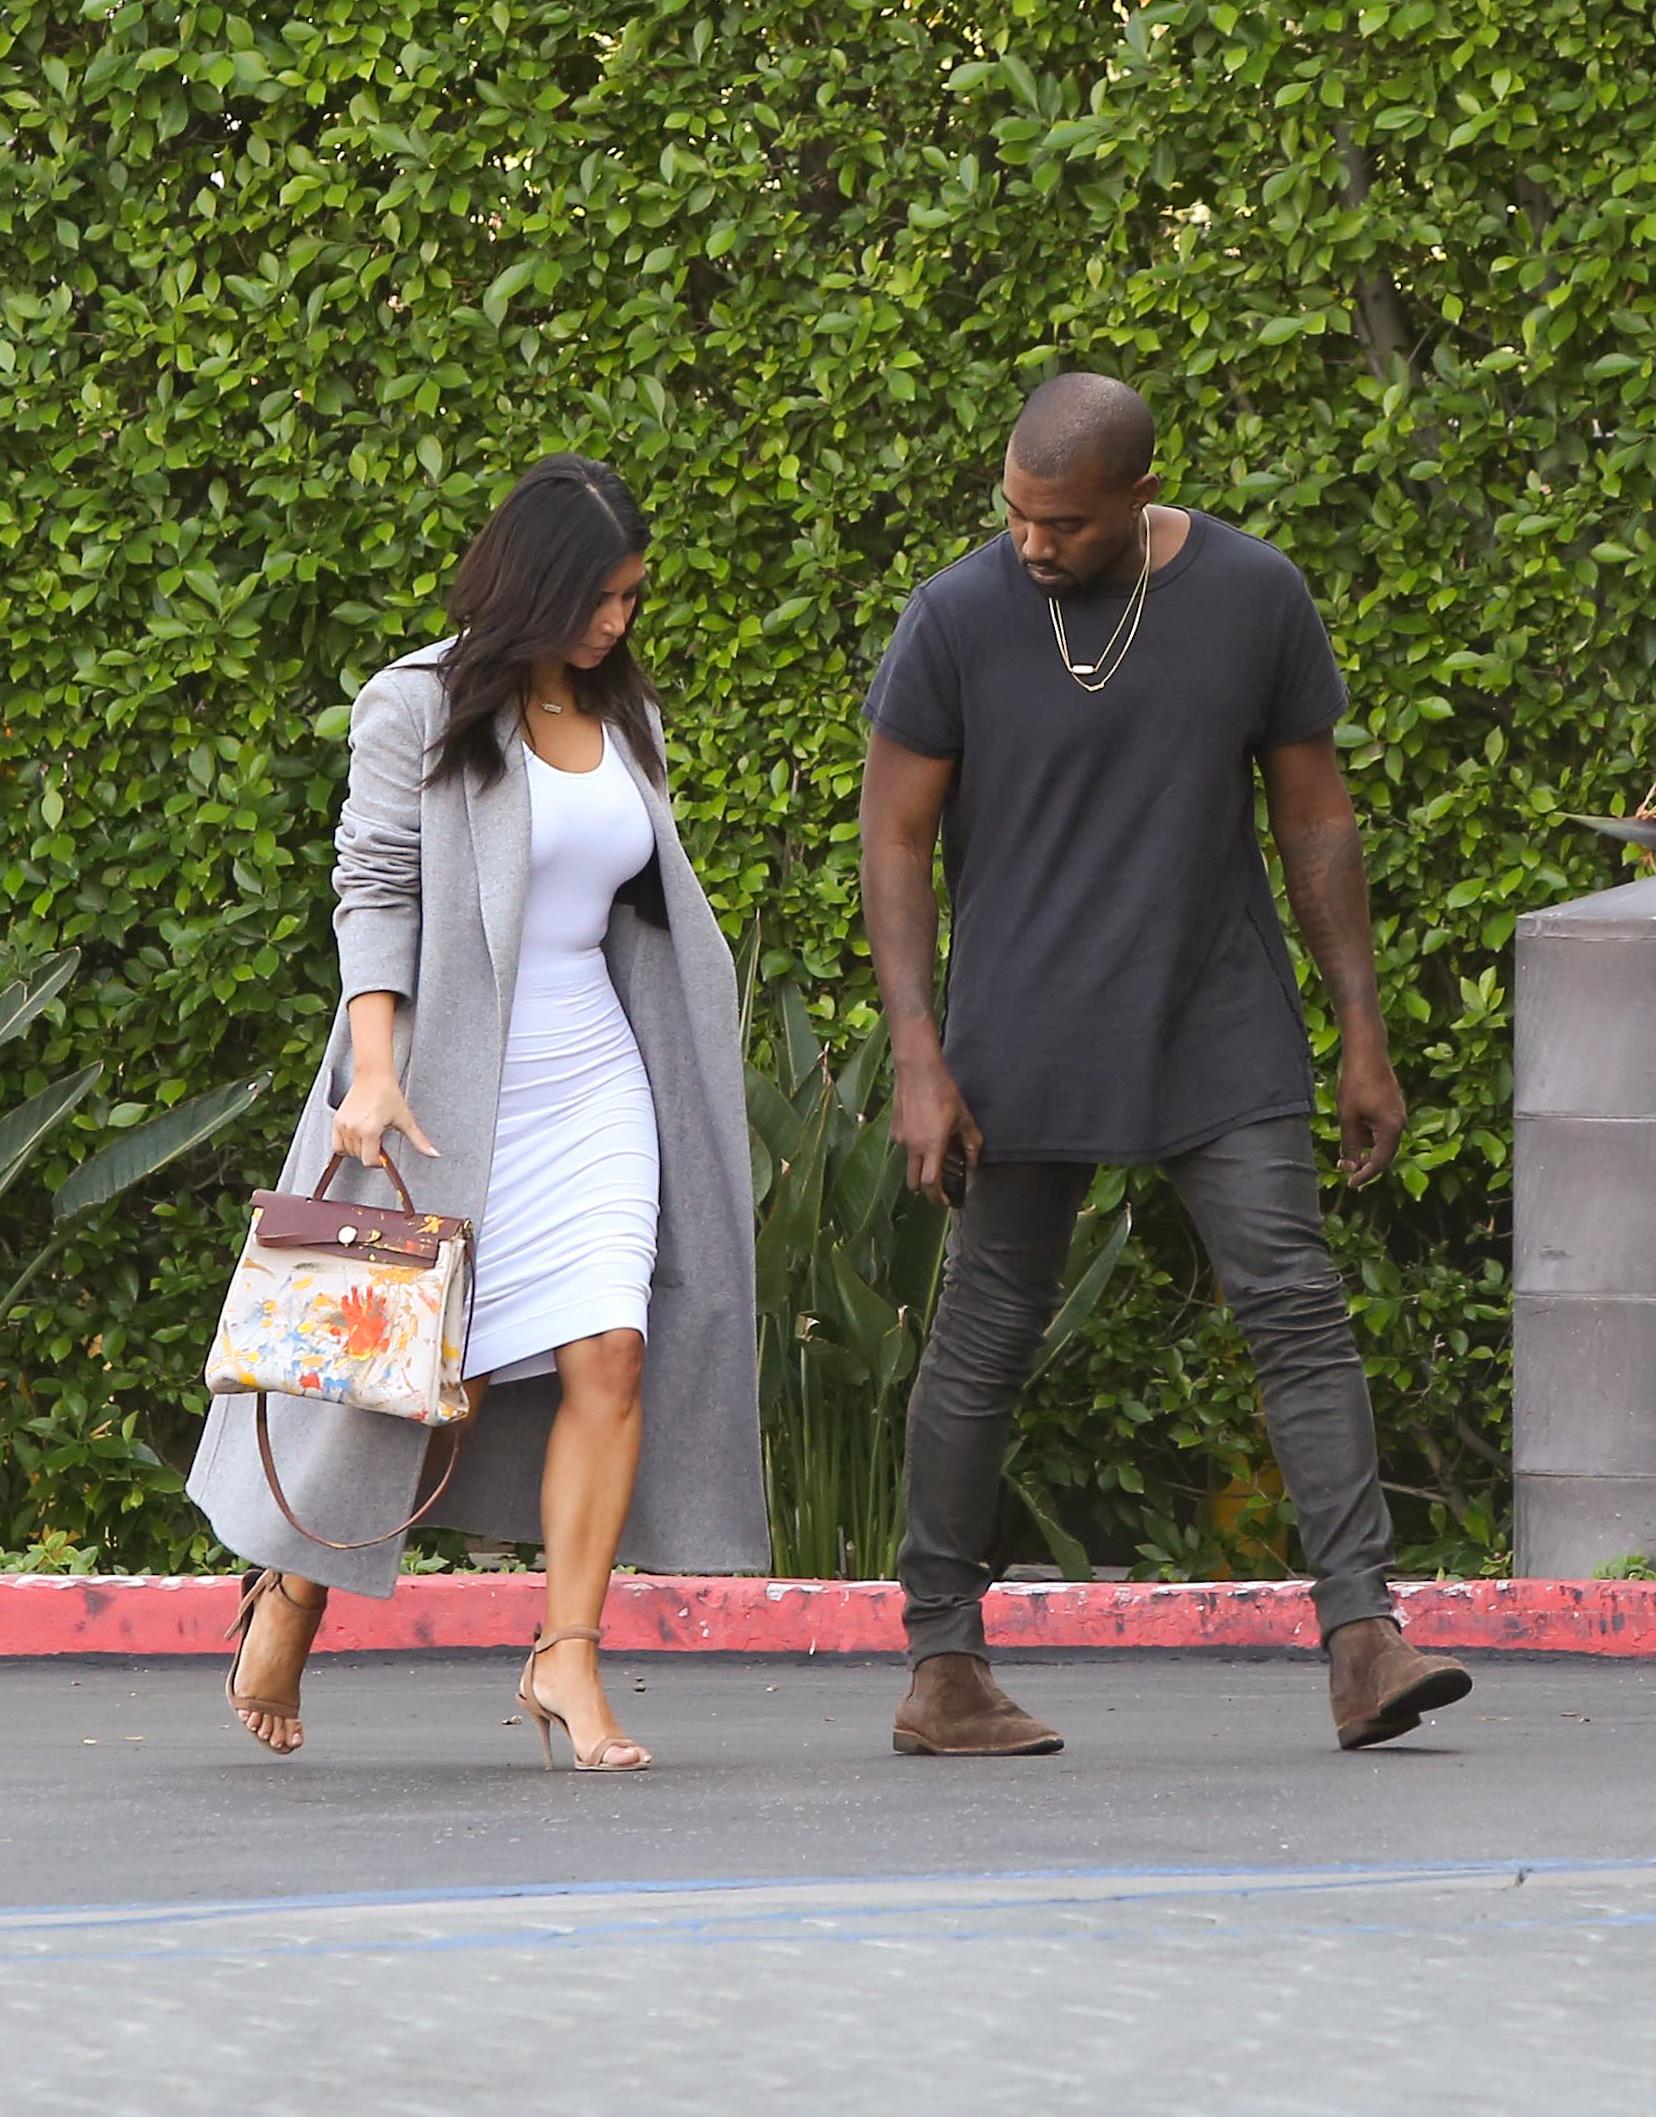 Kanye West gifts Kim Kardashian Hermes handbag featuring nude